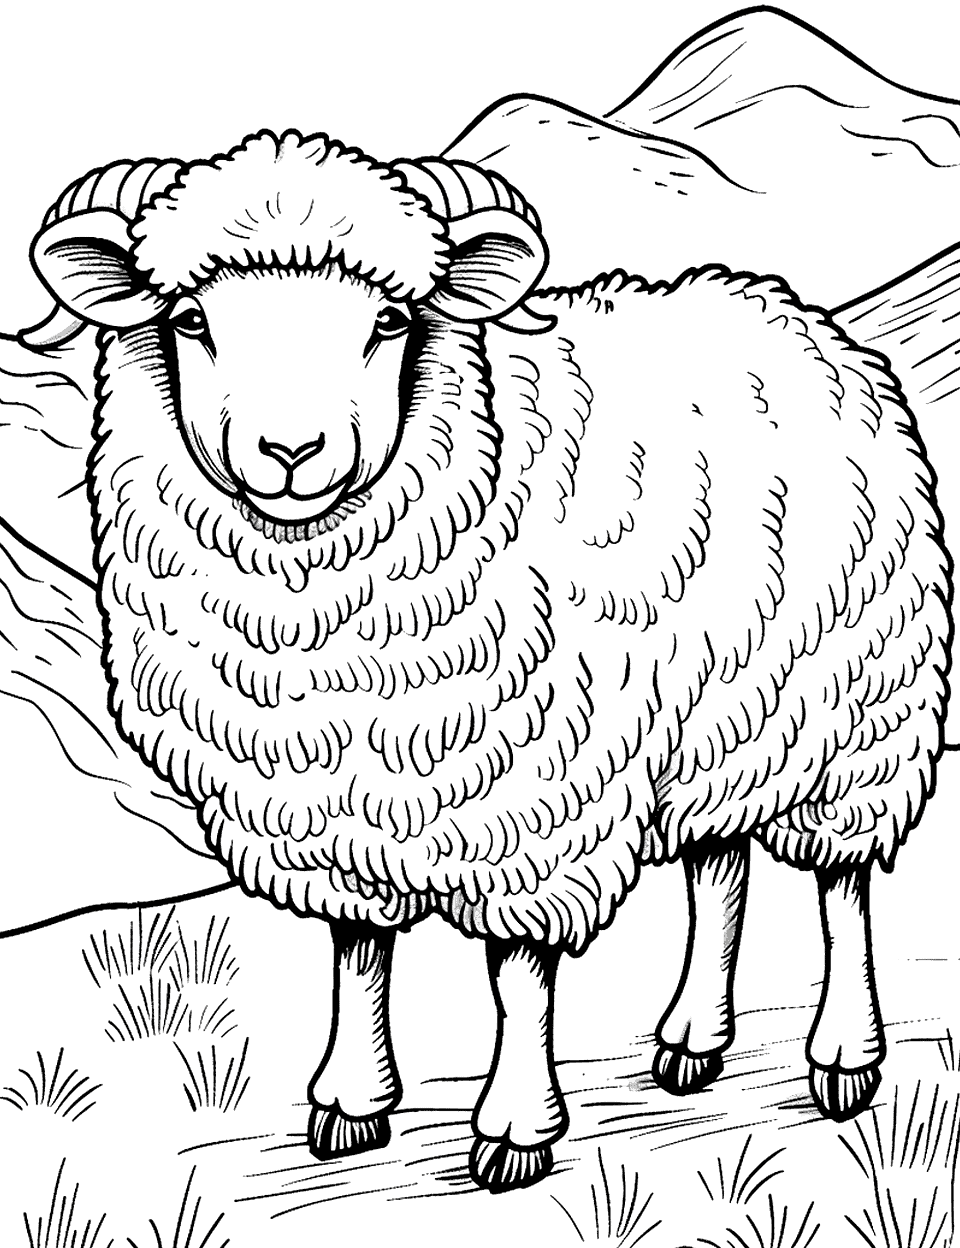 Valais Blacknose Sheep Coloring Page - A fluffy Valais Blacknose sheep standing in a Swiss mountain pasture.